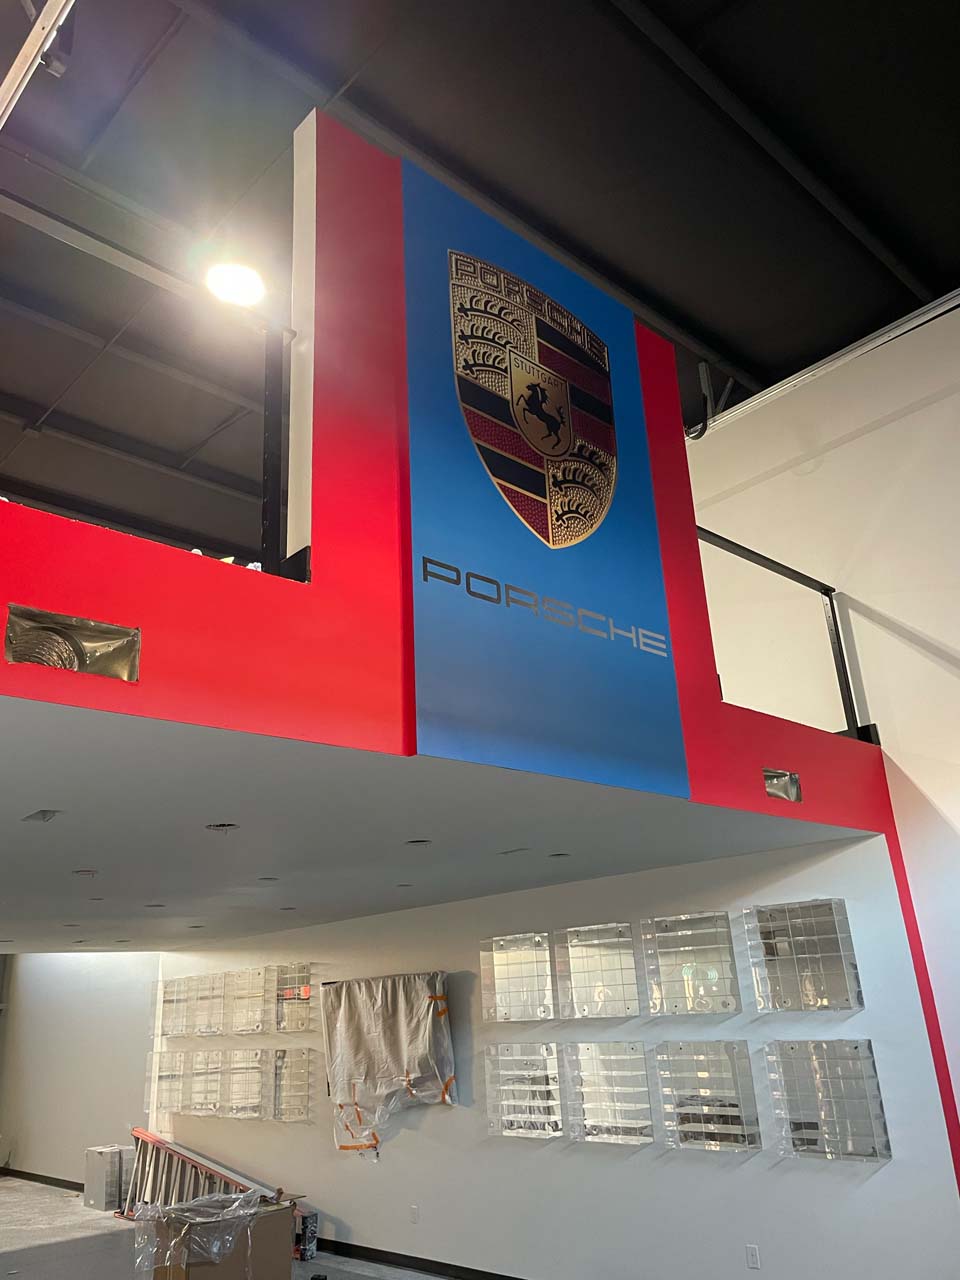 A Porsche sign in a new metal building